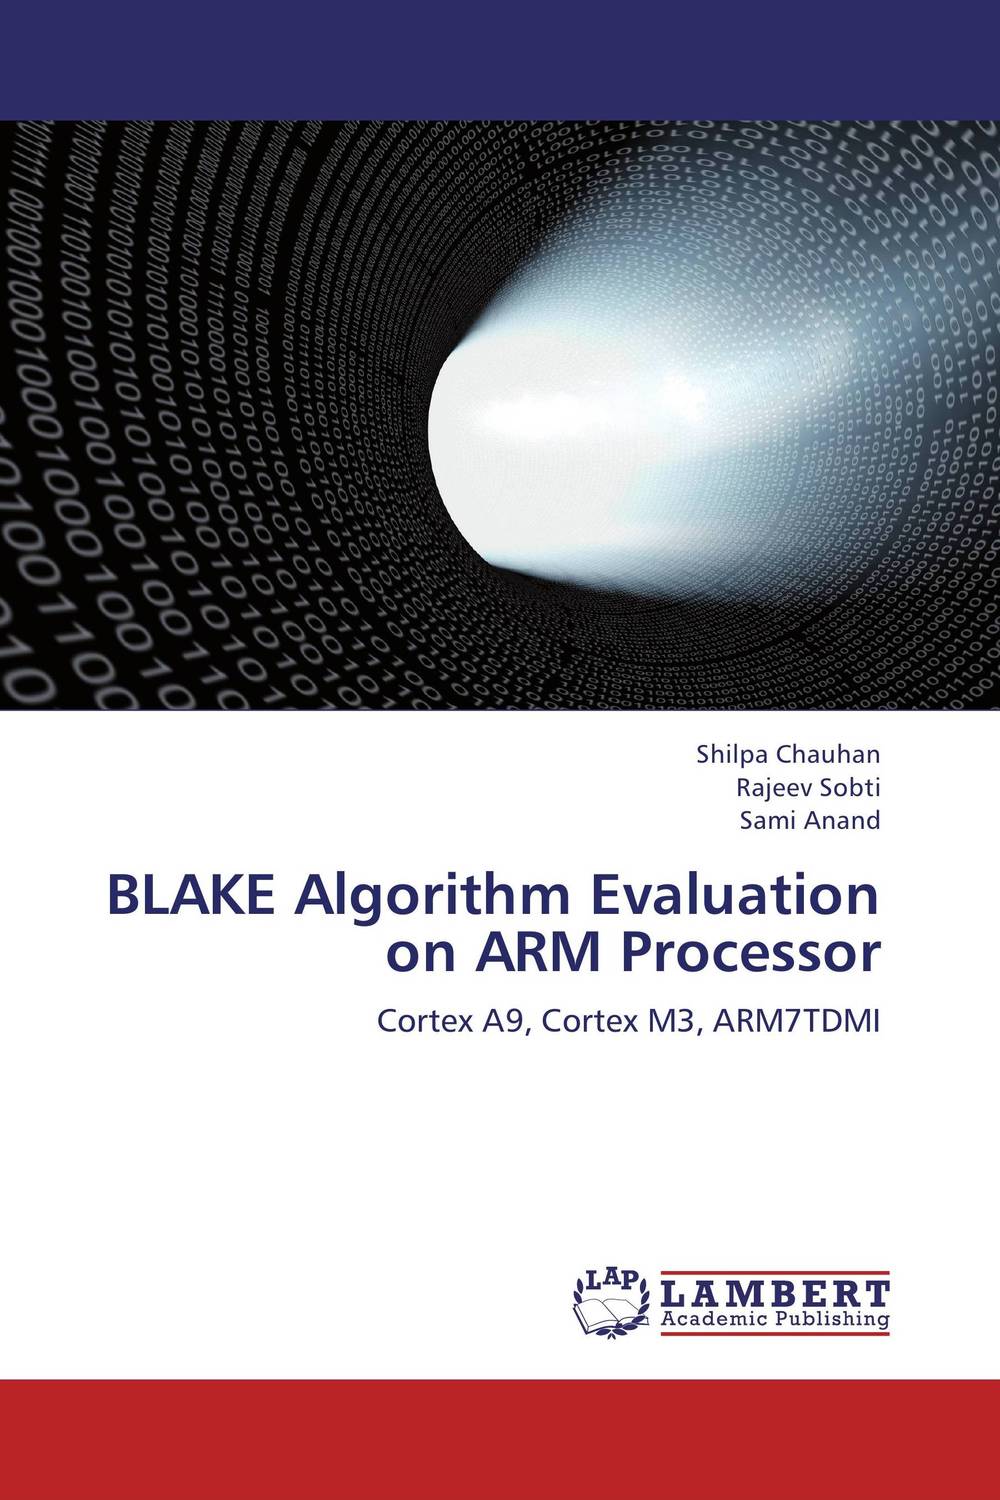 BLAKE Algorithm Evaluation on ARM Processor